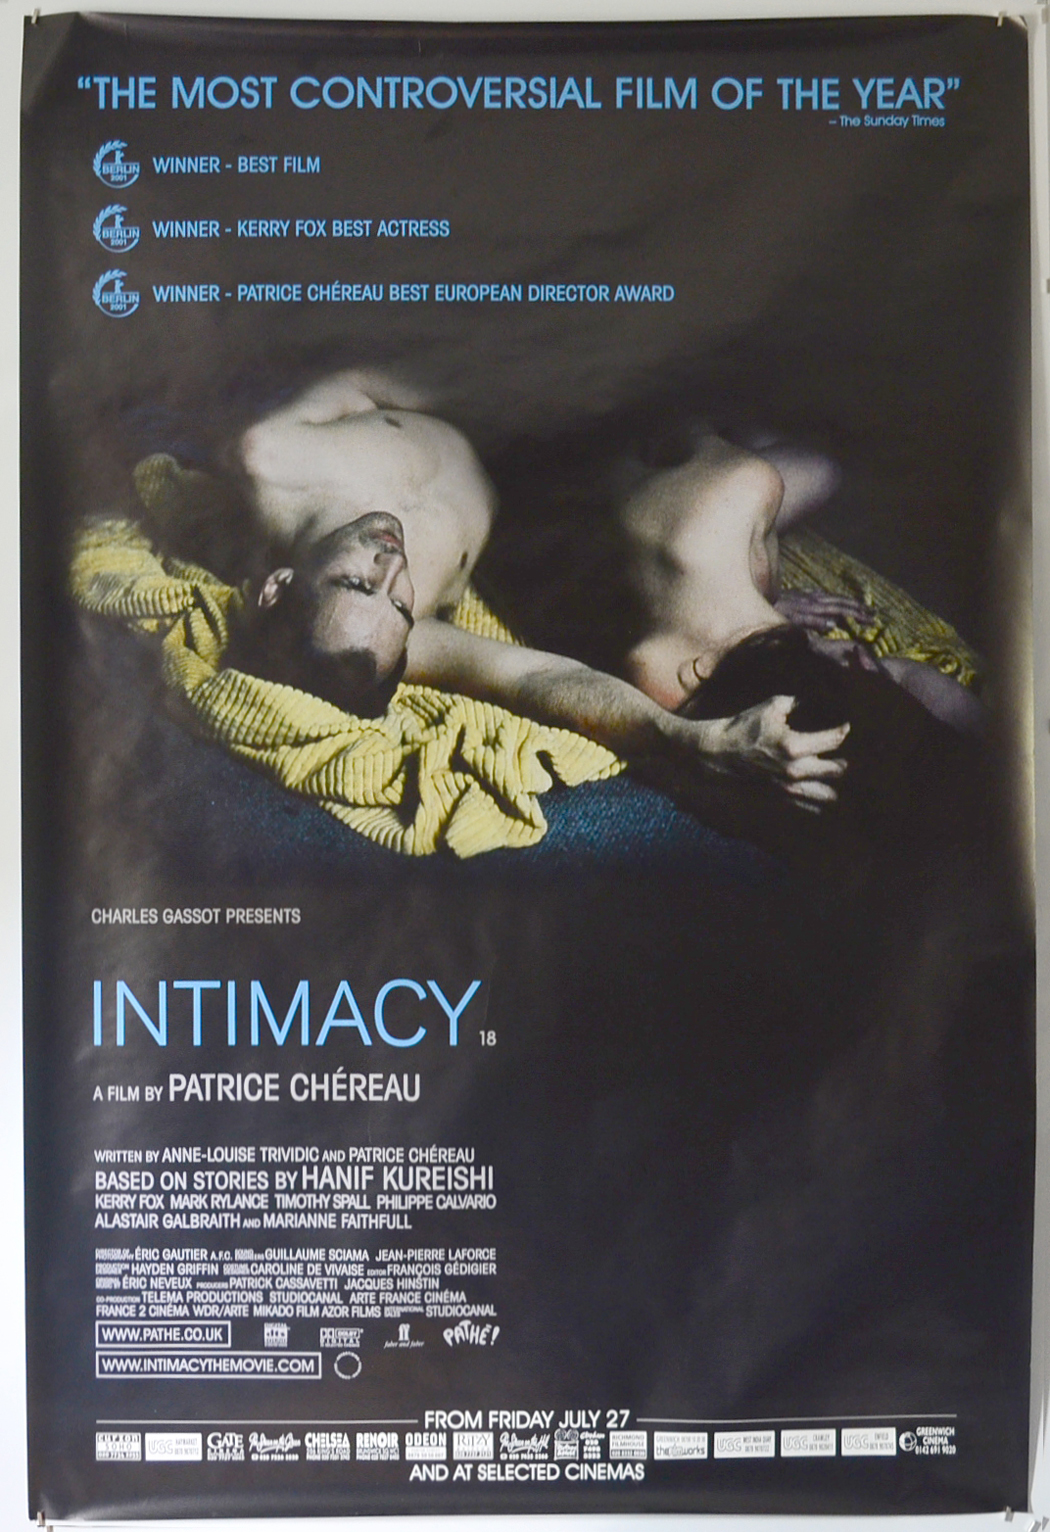 (2001) intimacy The 43